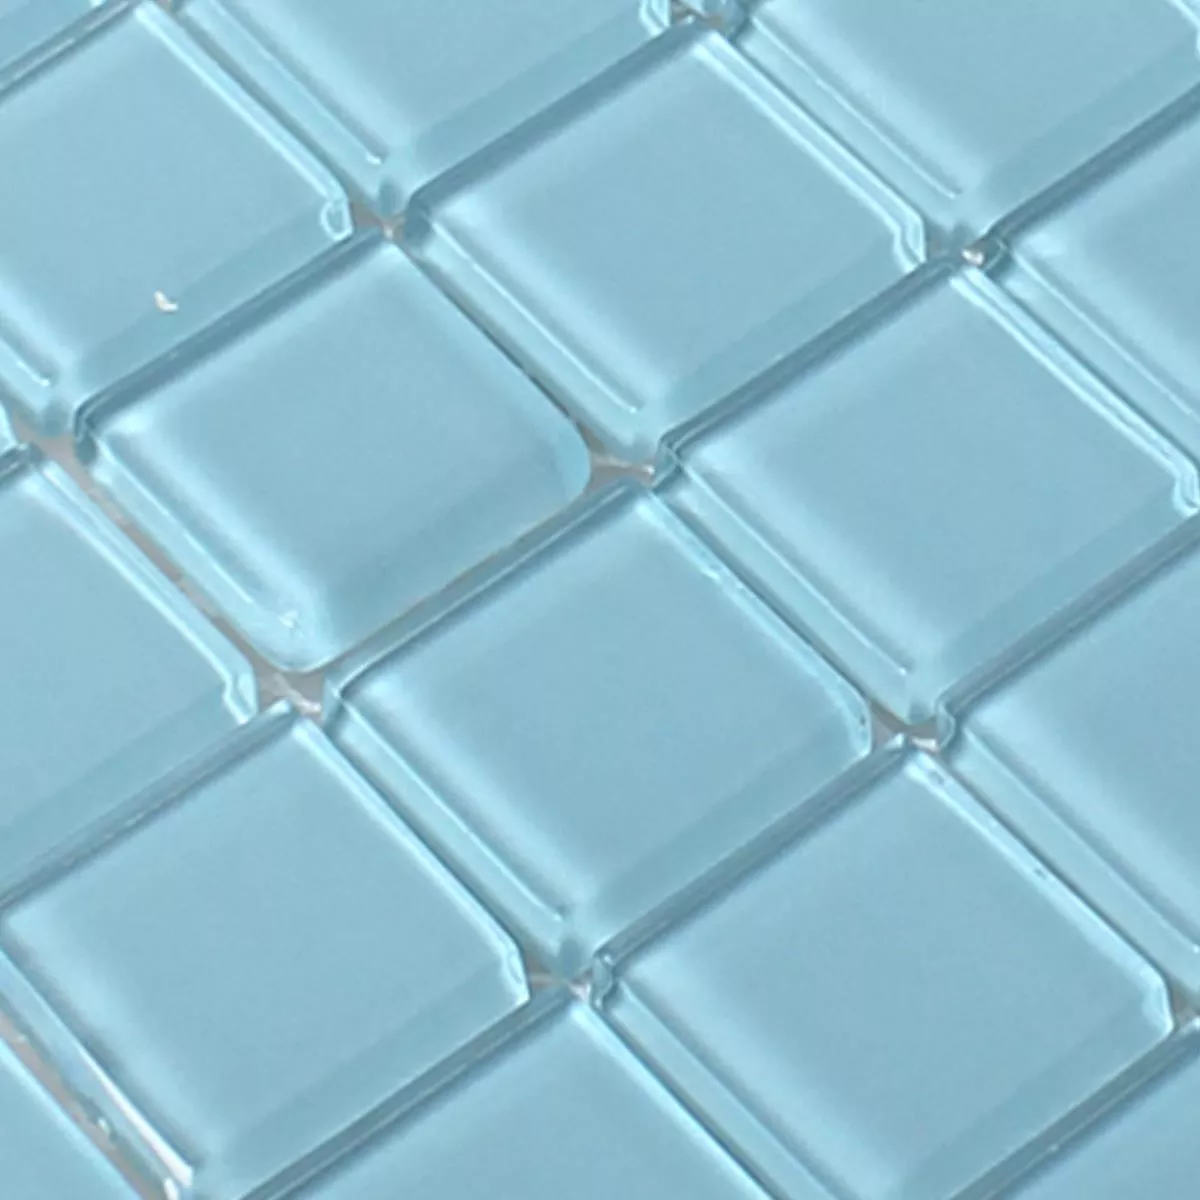 Sample Glass Mosaic Tiles Florida Light Blue